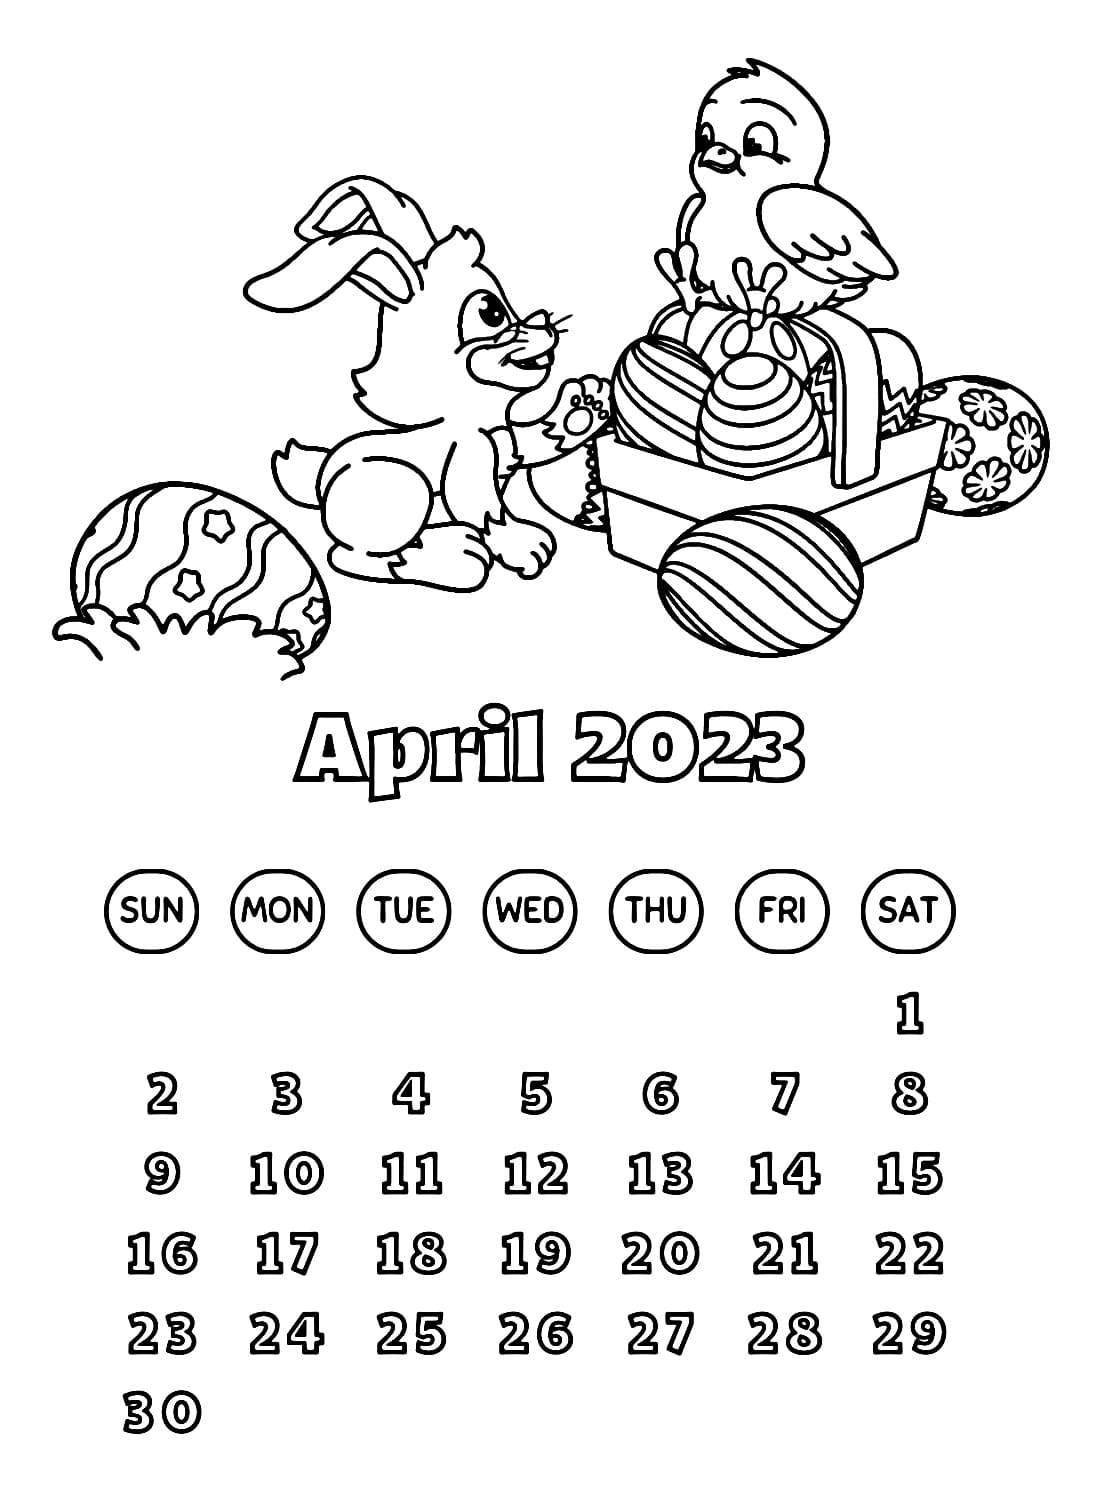 April 2023 Calendar coloring page - Download, Print or Color Online for ...